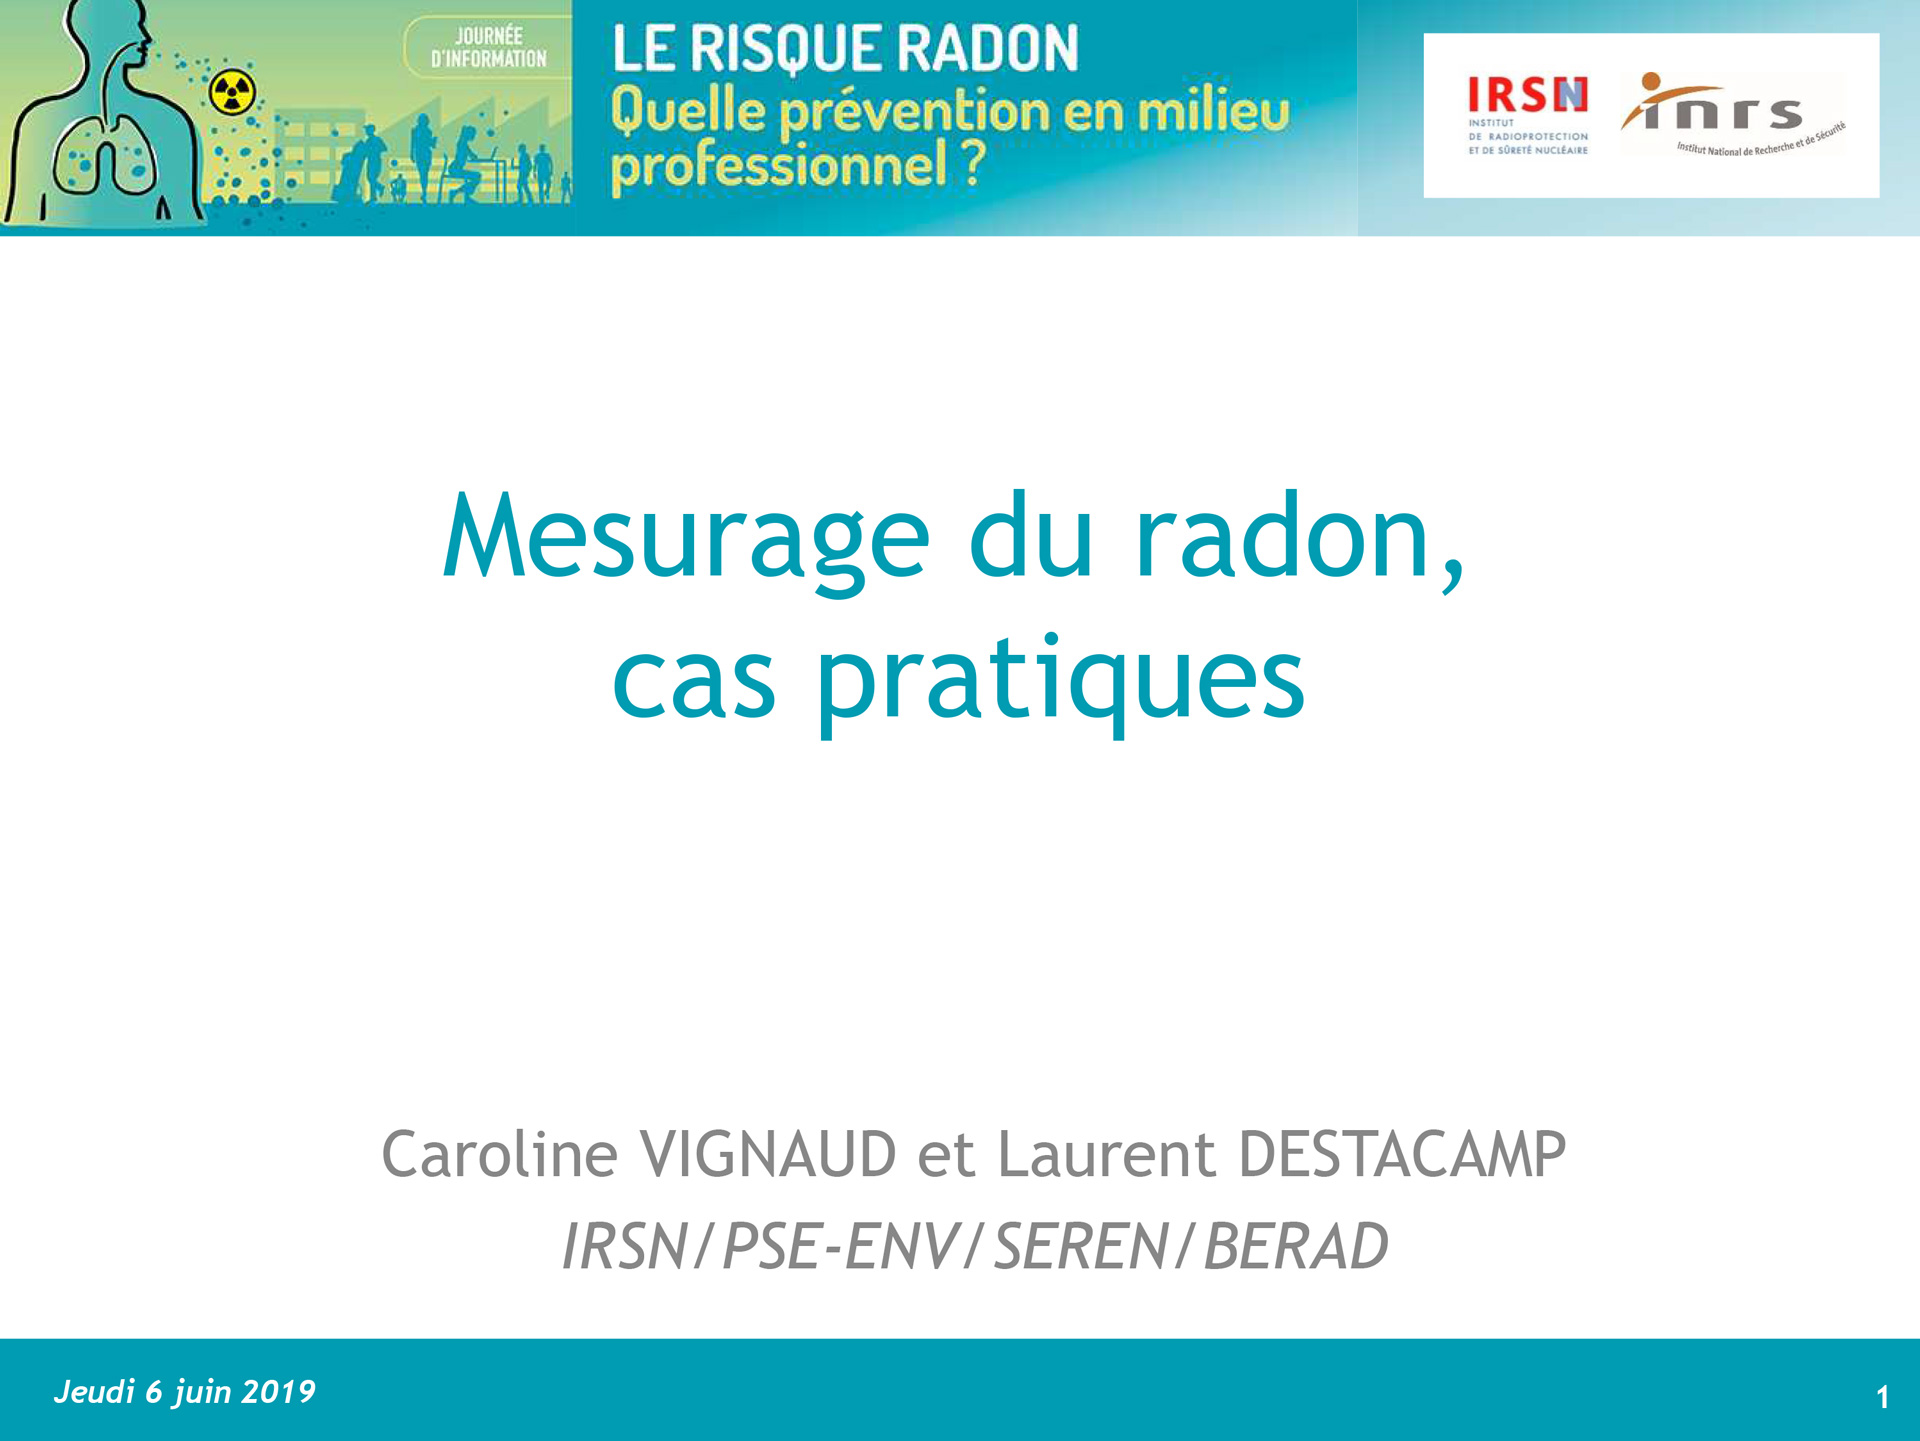 Mesurage du radon par Caroline VIGNAUD et Laurent DESTACAMP, IRSN